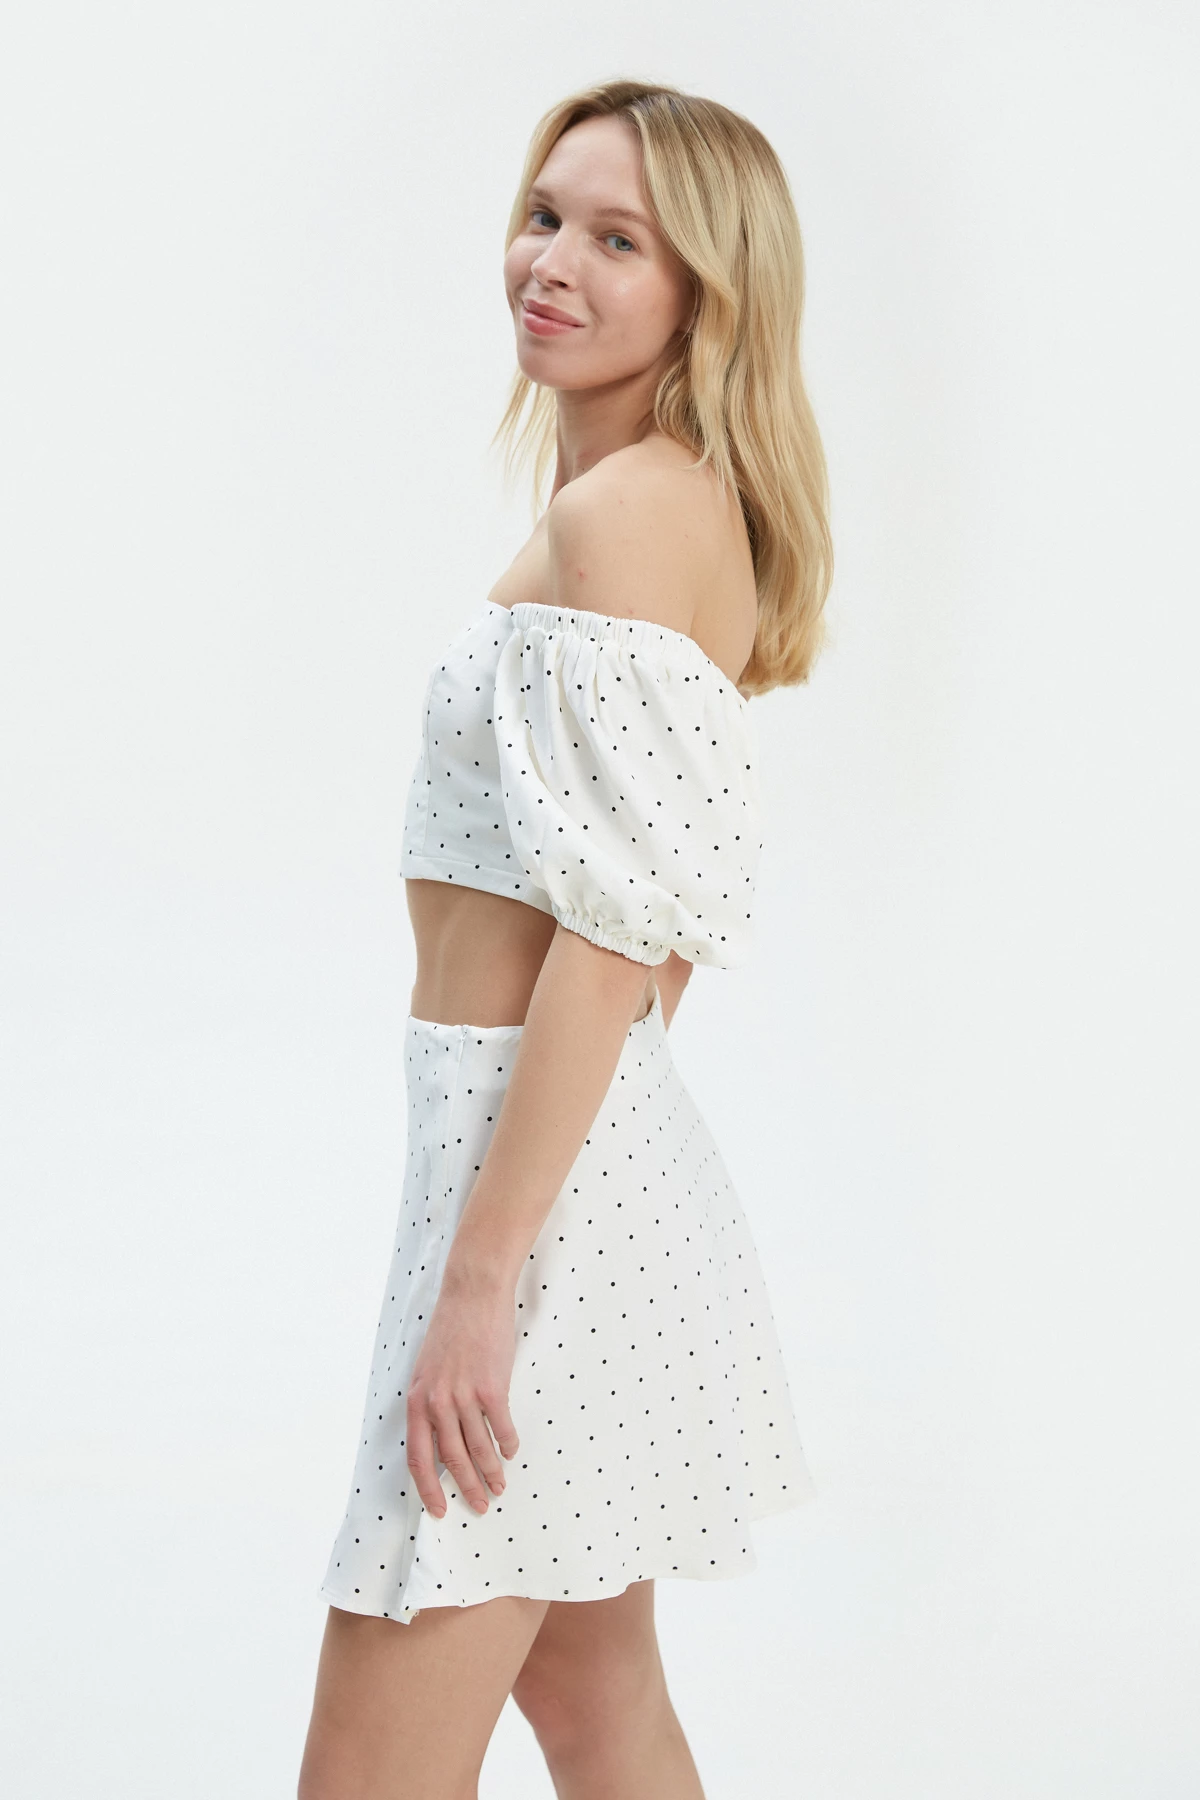 Milky viscose short skirt with polka dot print, photo 4